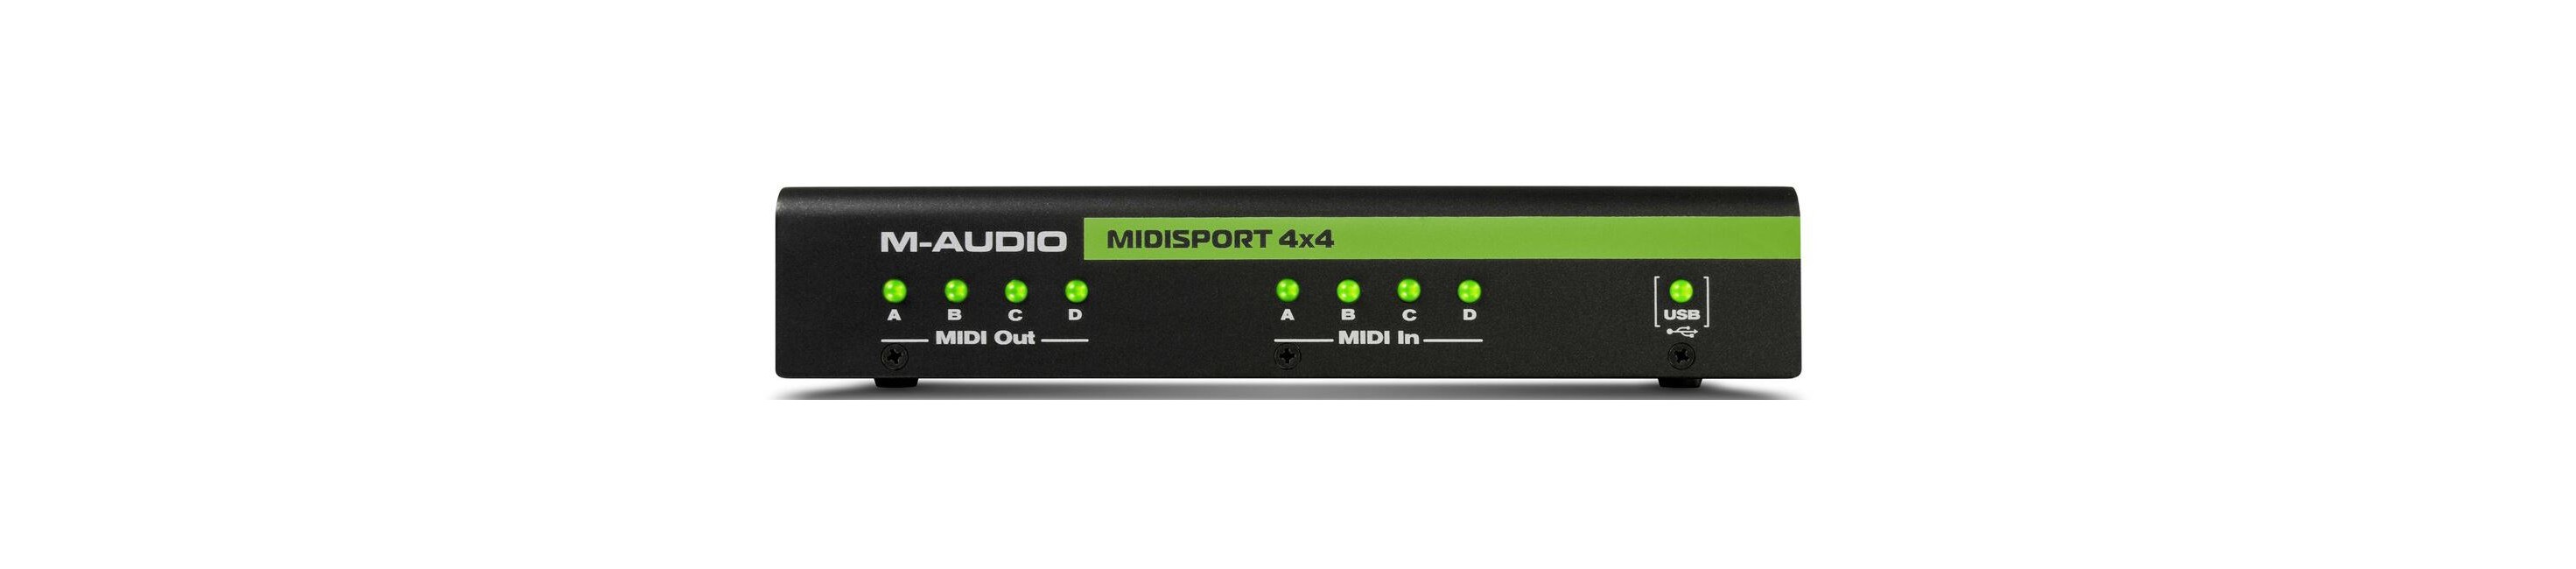 M-Audio - Midisport 4x4 - USB MIDI Interface (20th Anniversary Edition)